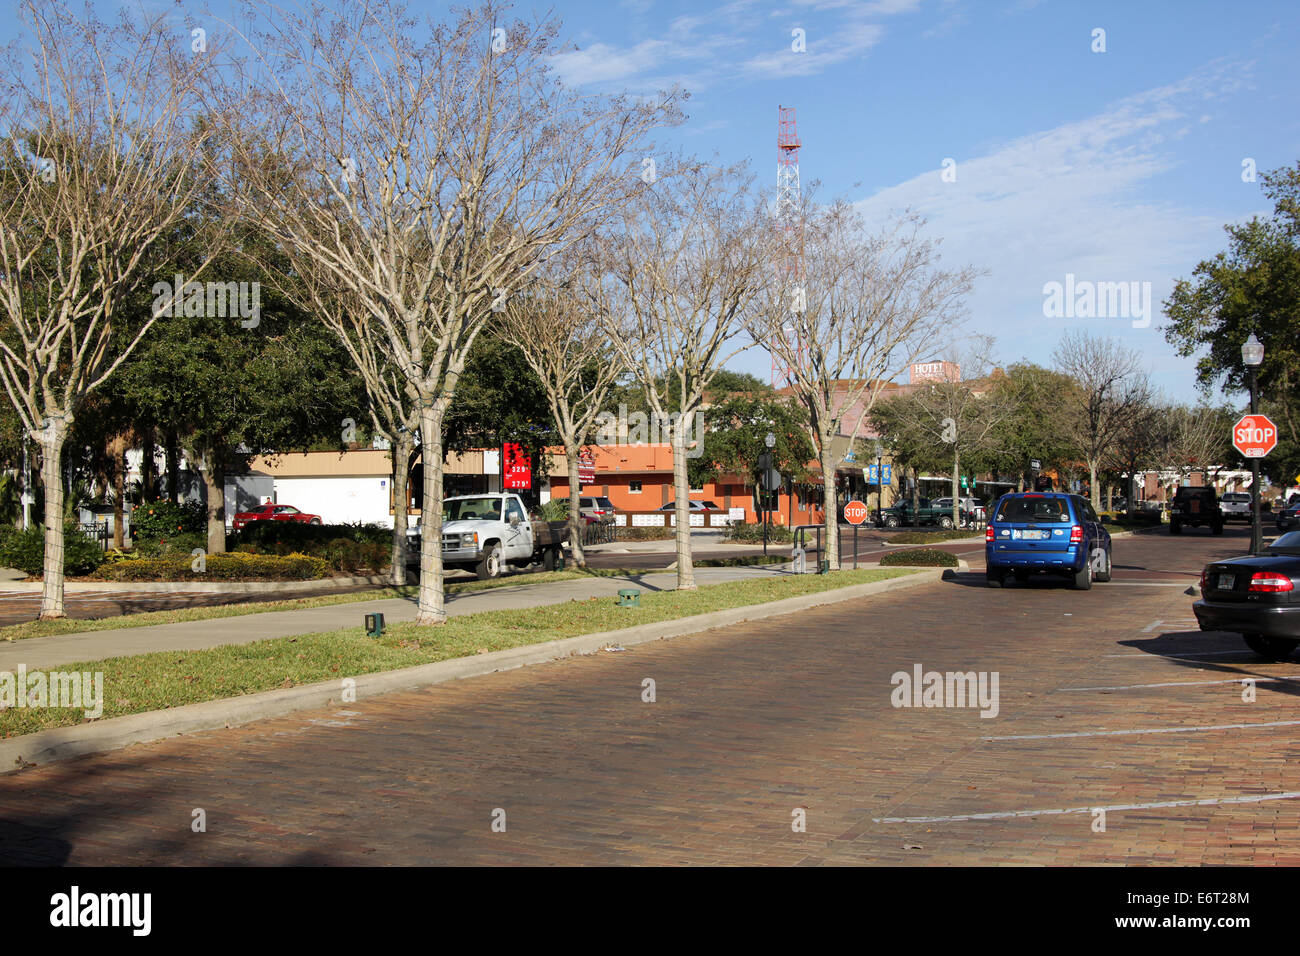 Main street views and buildings in Winter Garden city, a suburb of Orlando, Florida, Orange County. Stock Photo